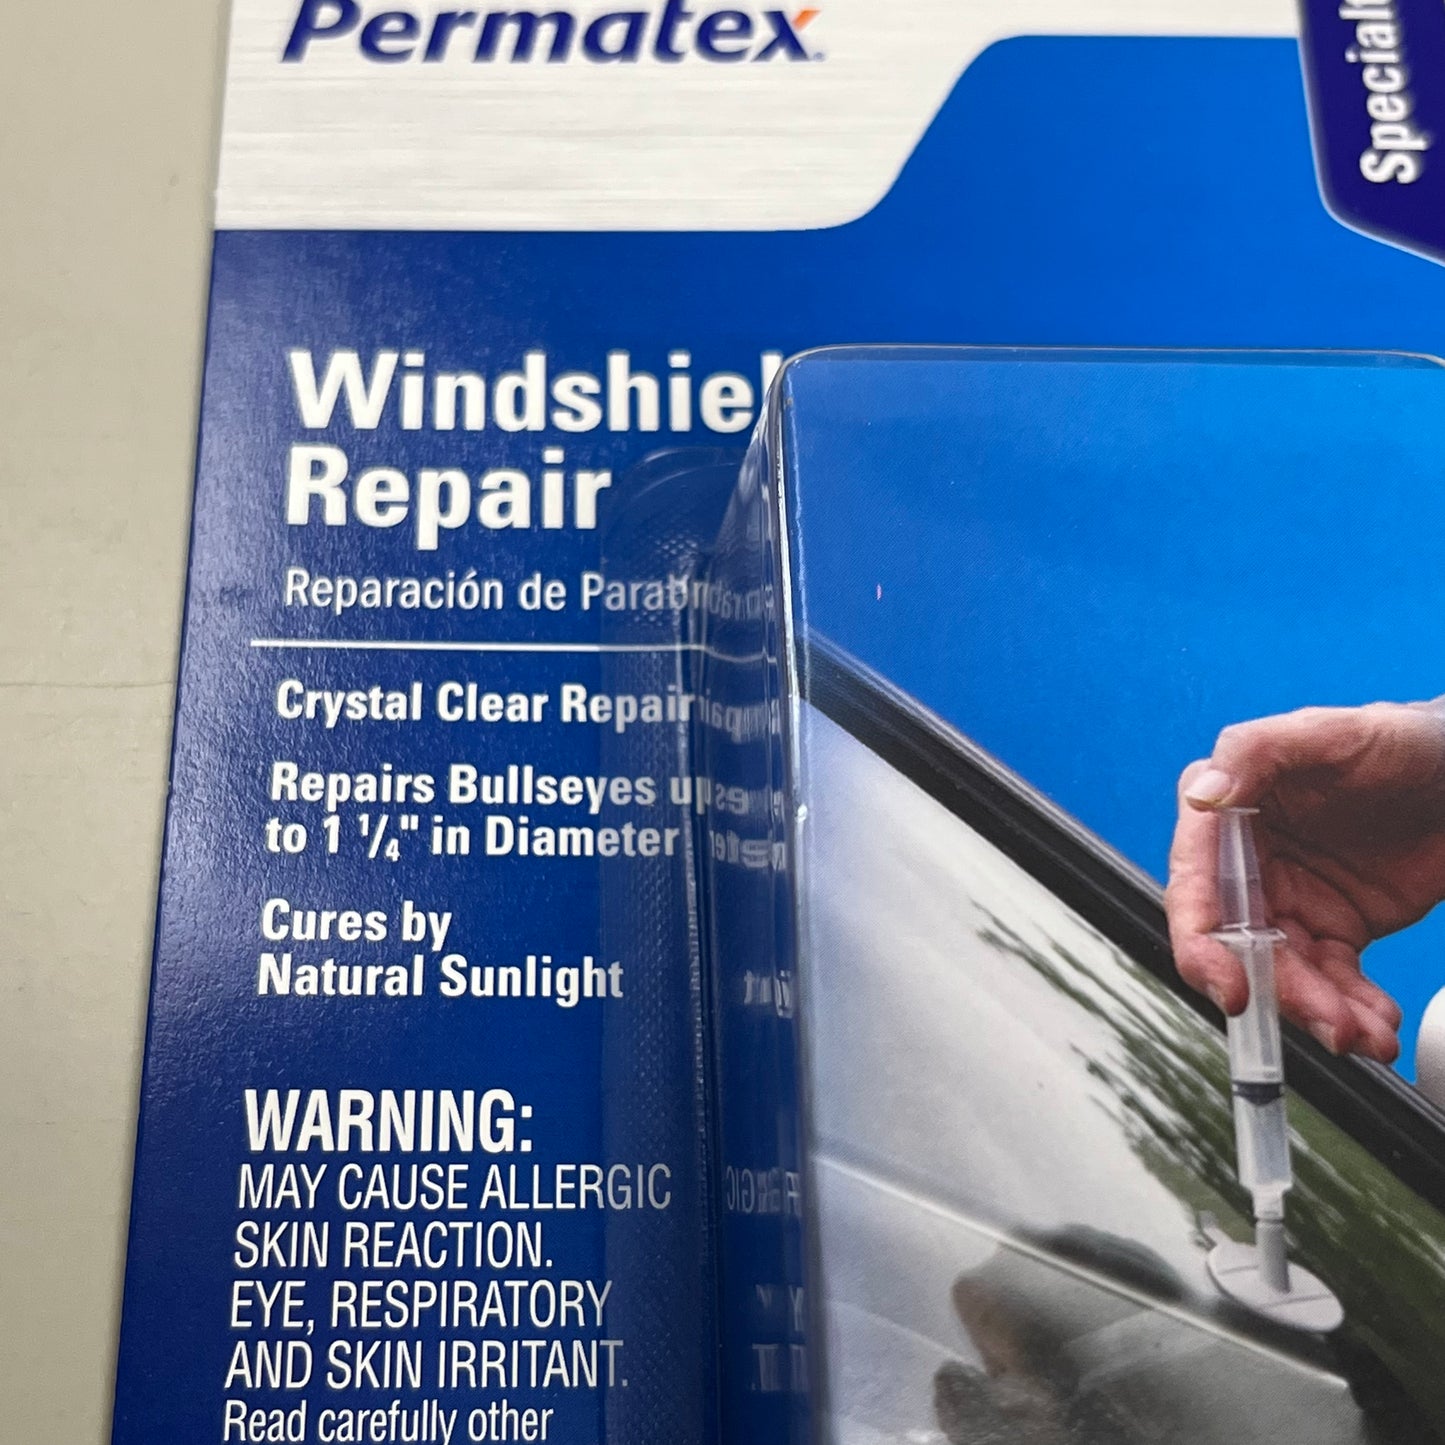 PERMATEX Windshield Repairs bullseyes up to a 1 1/4" inch in Diameter 16067 (New)